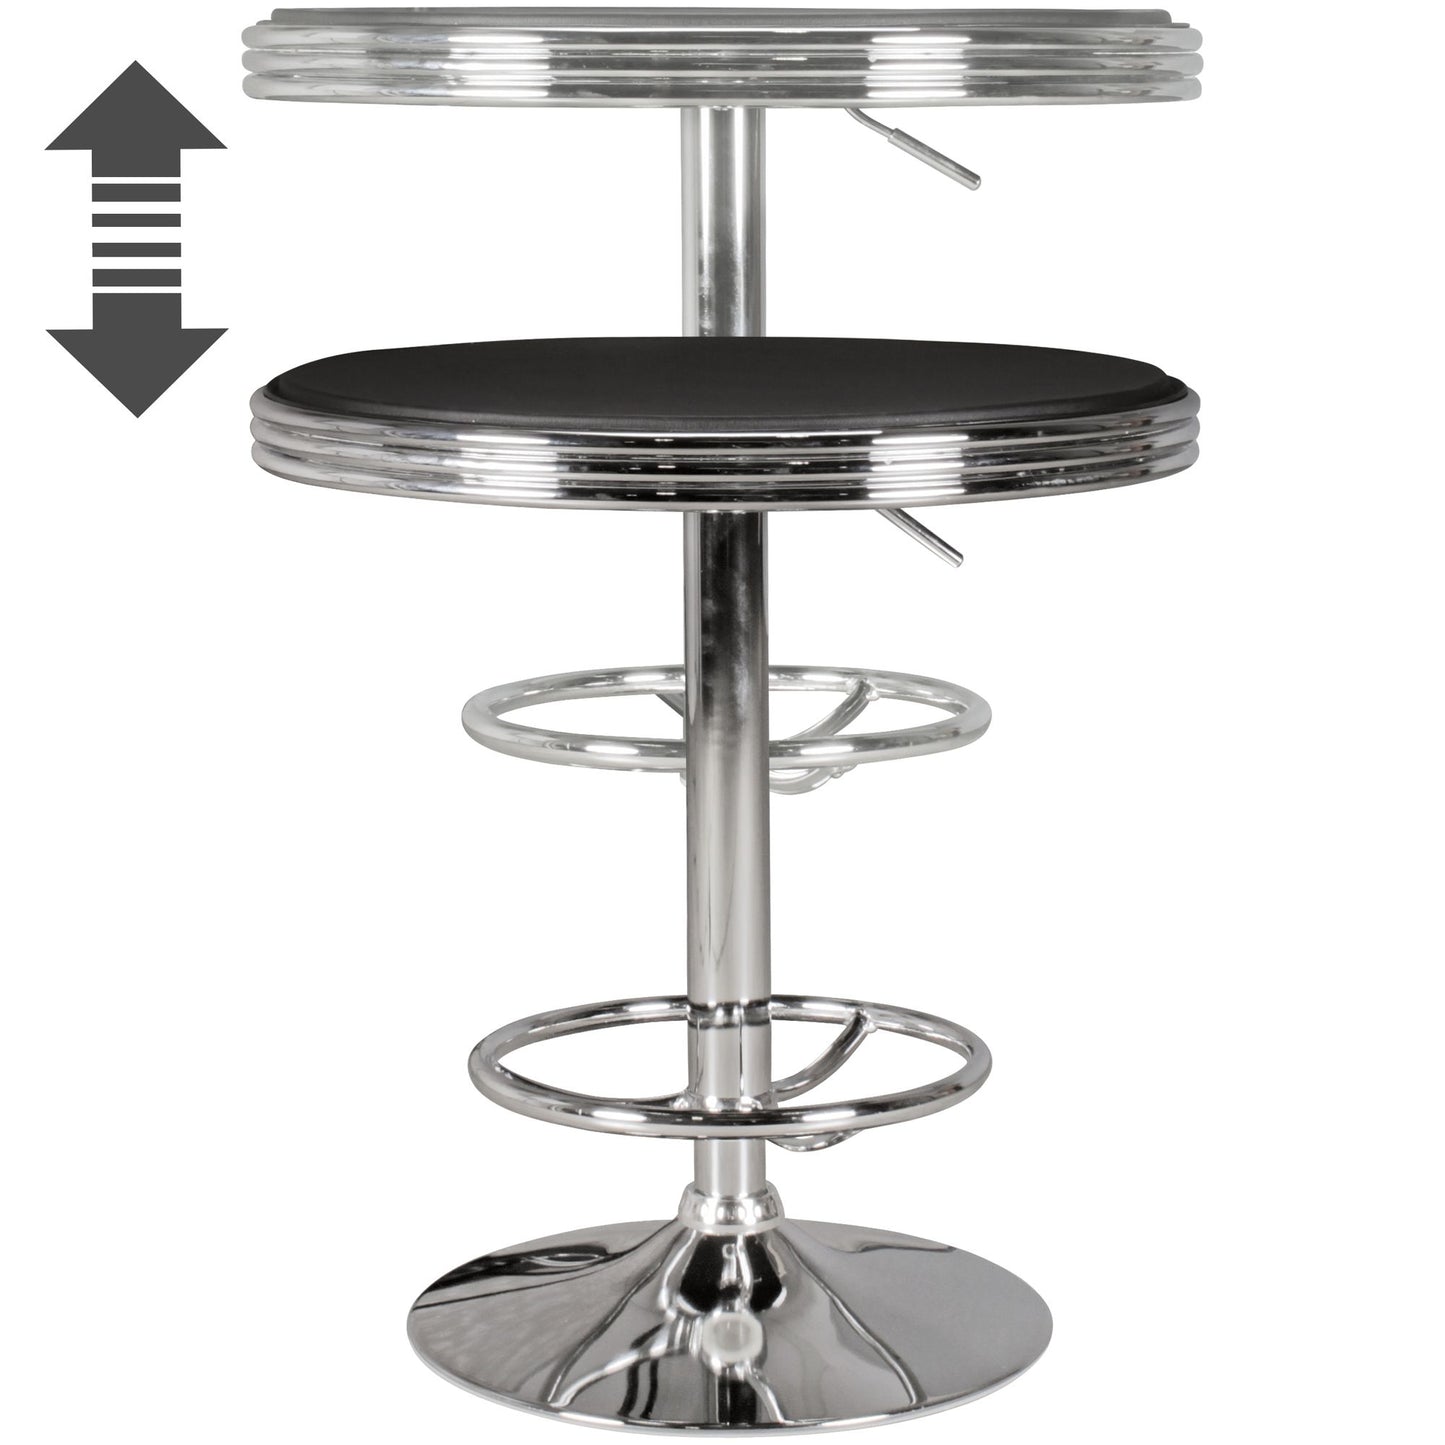 Table de bar Nancy's Manistee - American Diner - Table de bistro - Table haute - Table debout - Noir - Aluminium